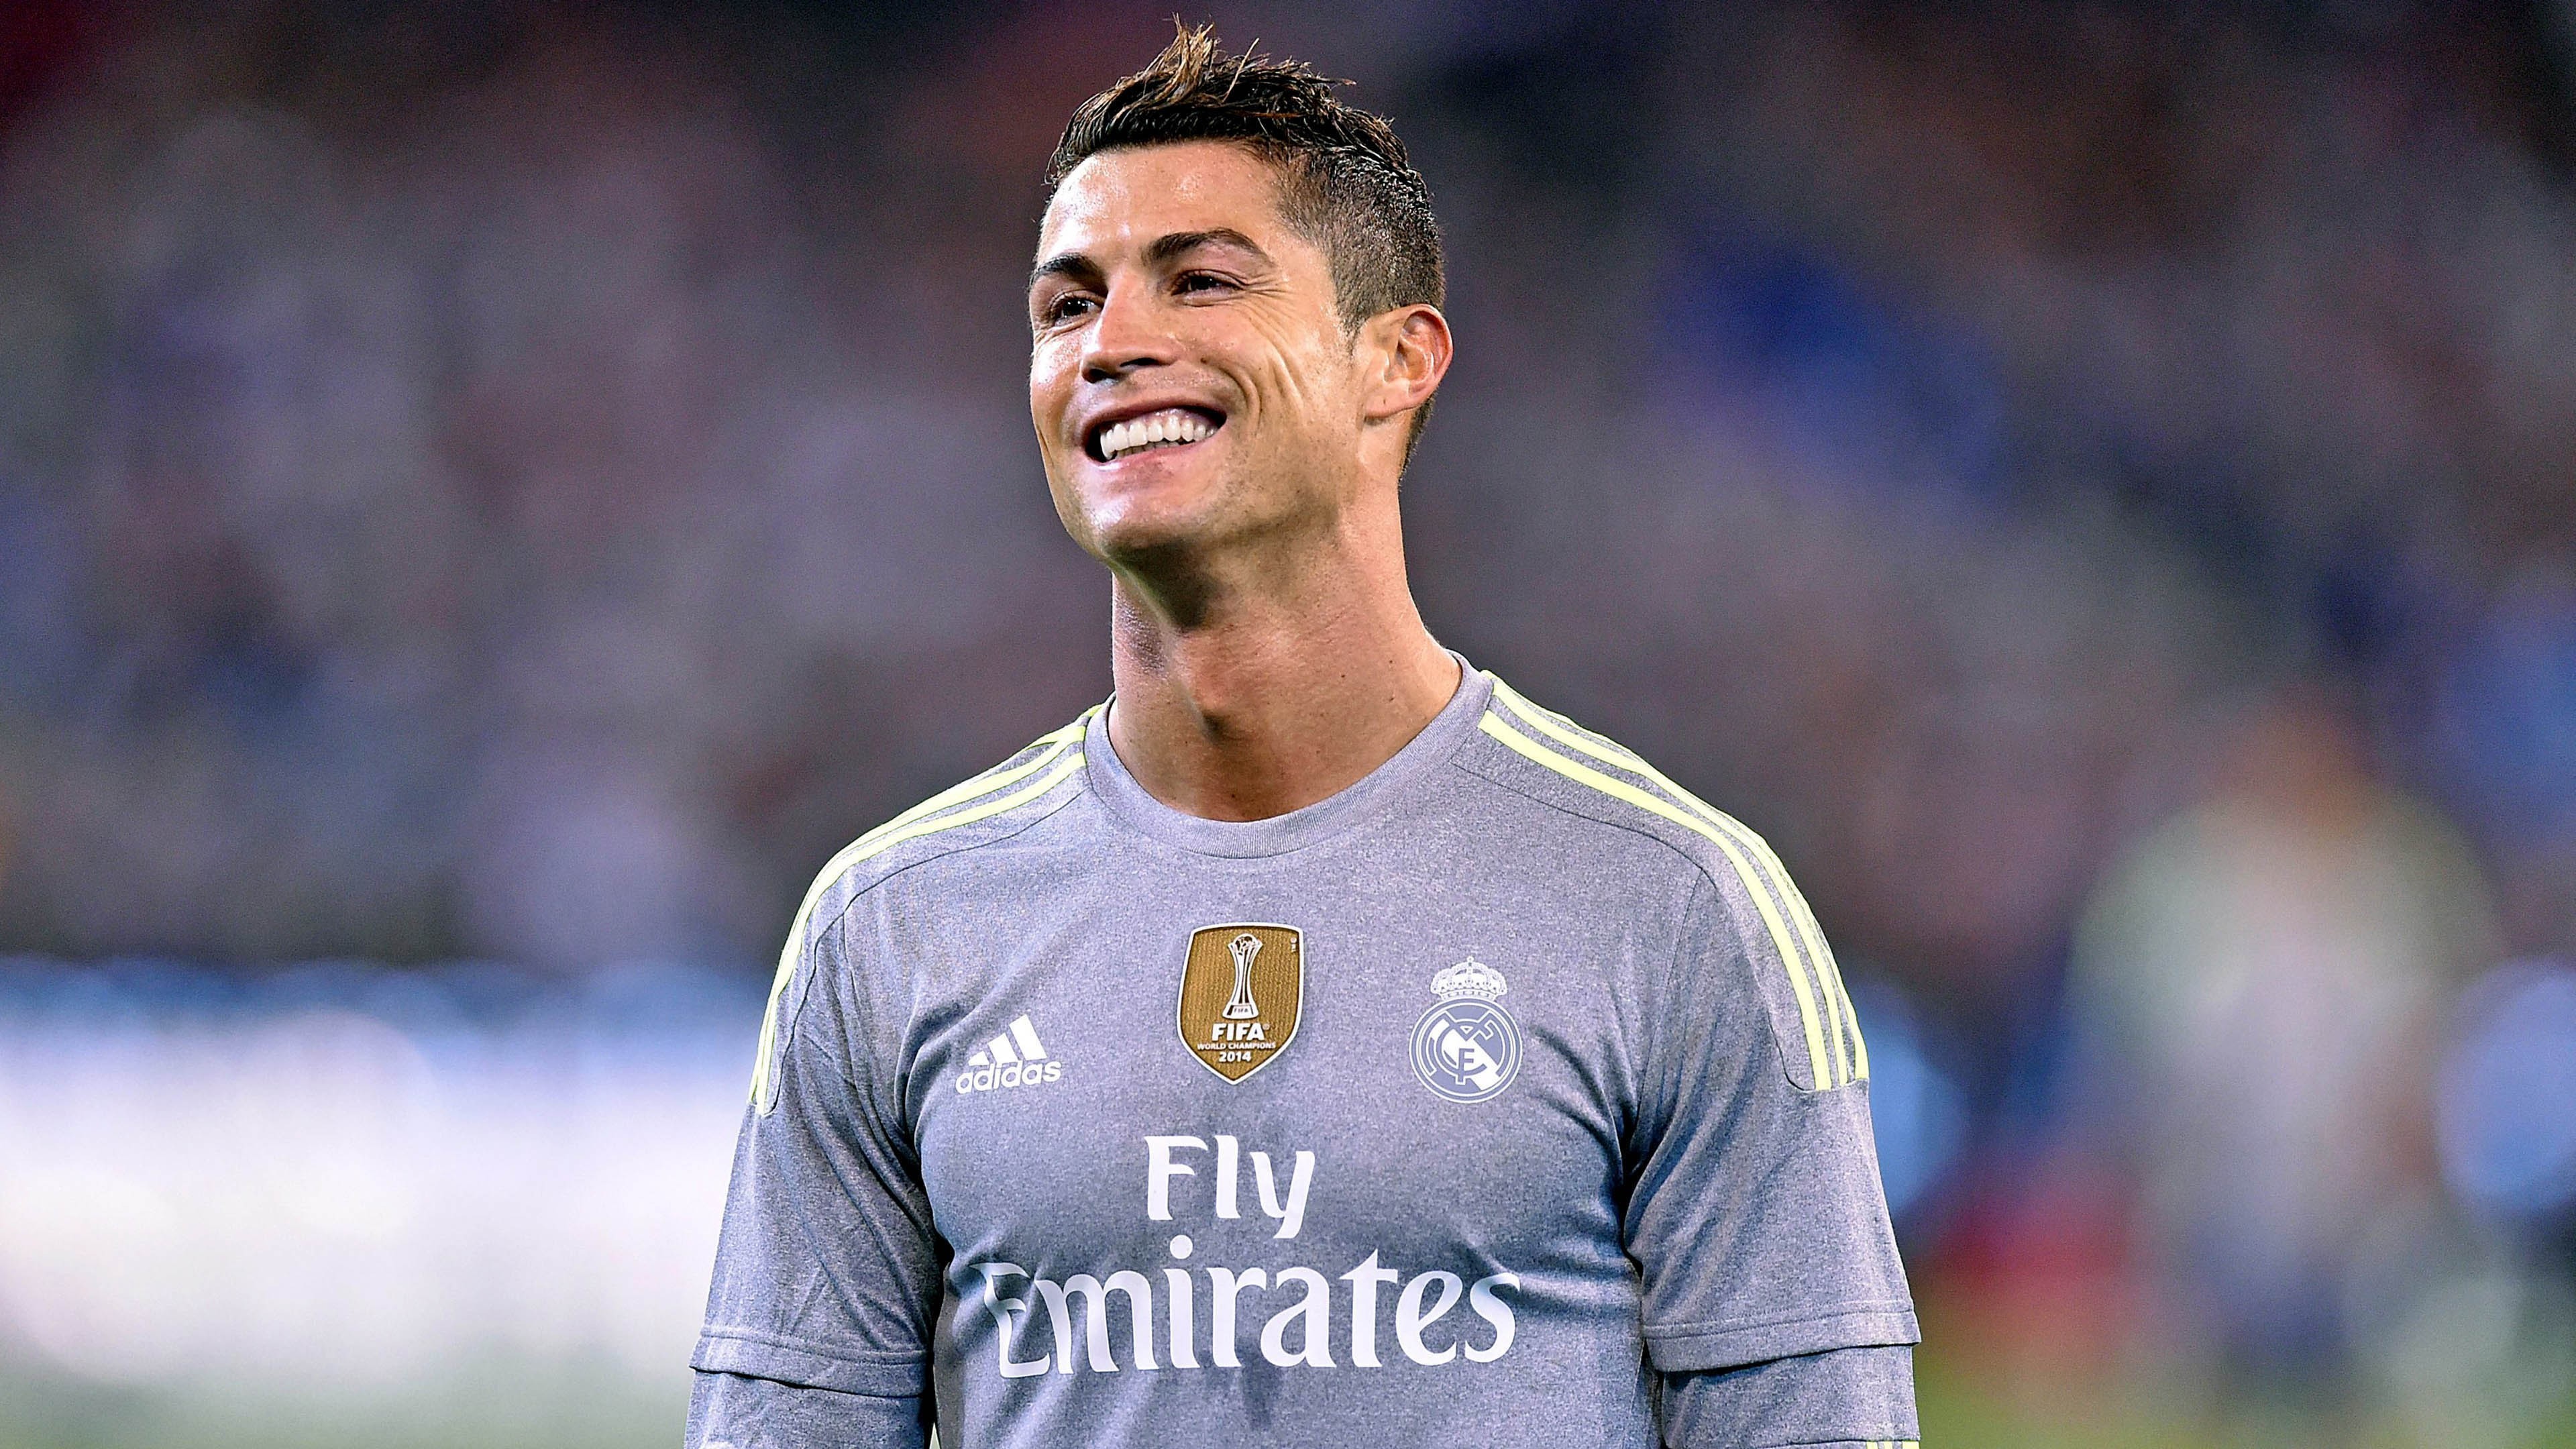 3840x2160 Cristiano Ronaldo Smiling Ultra HD 4K Wallpaper Download Free